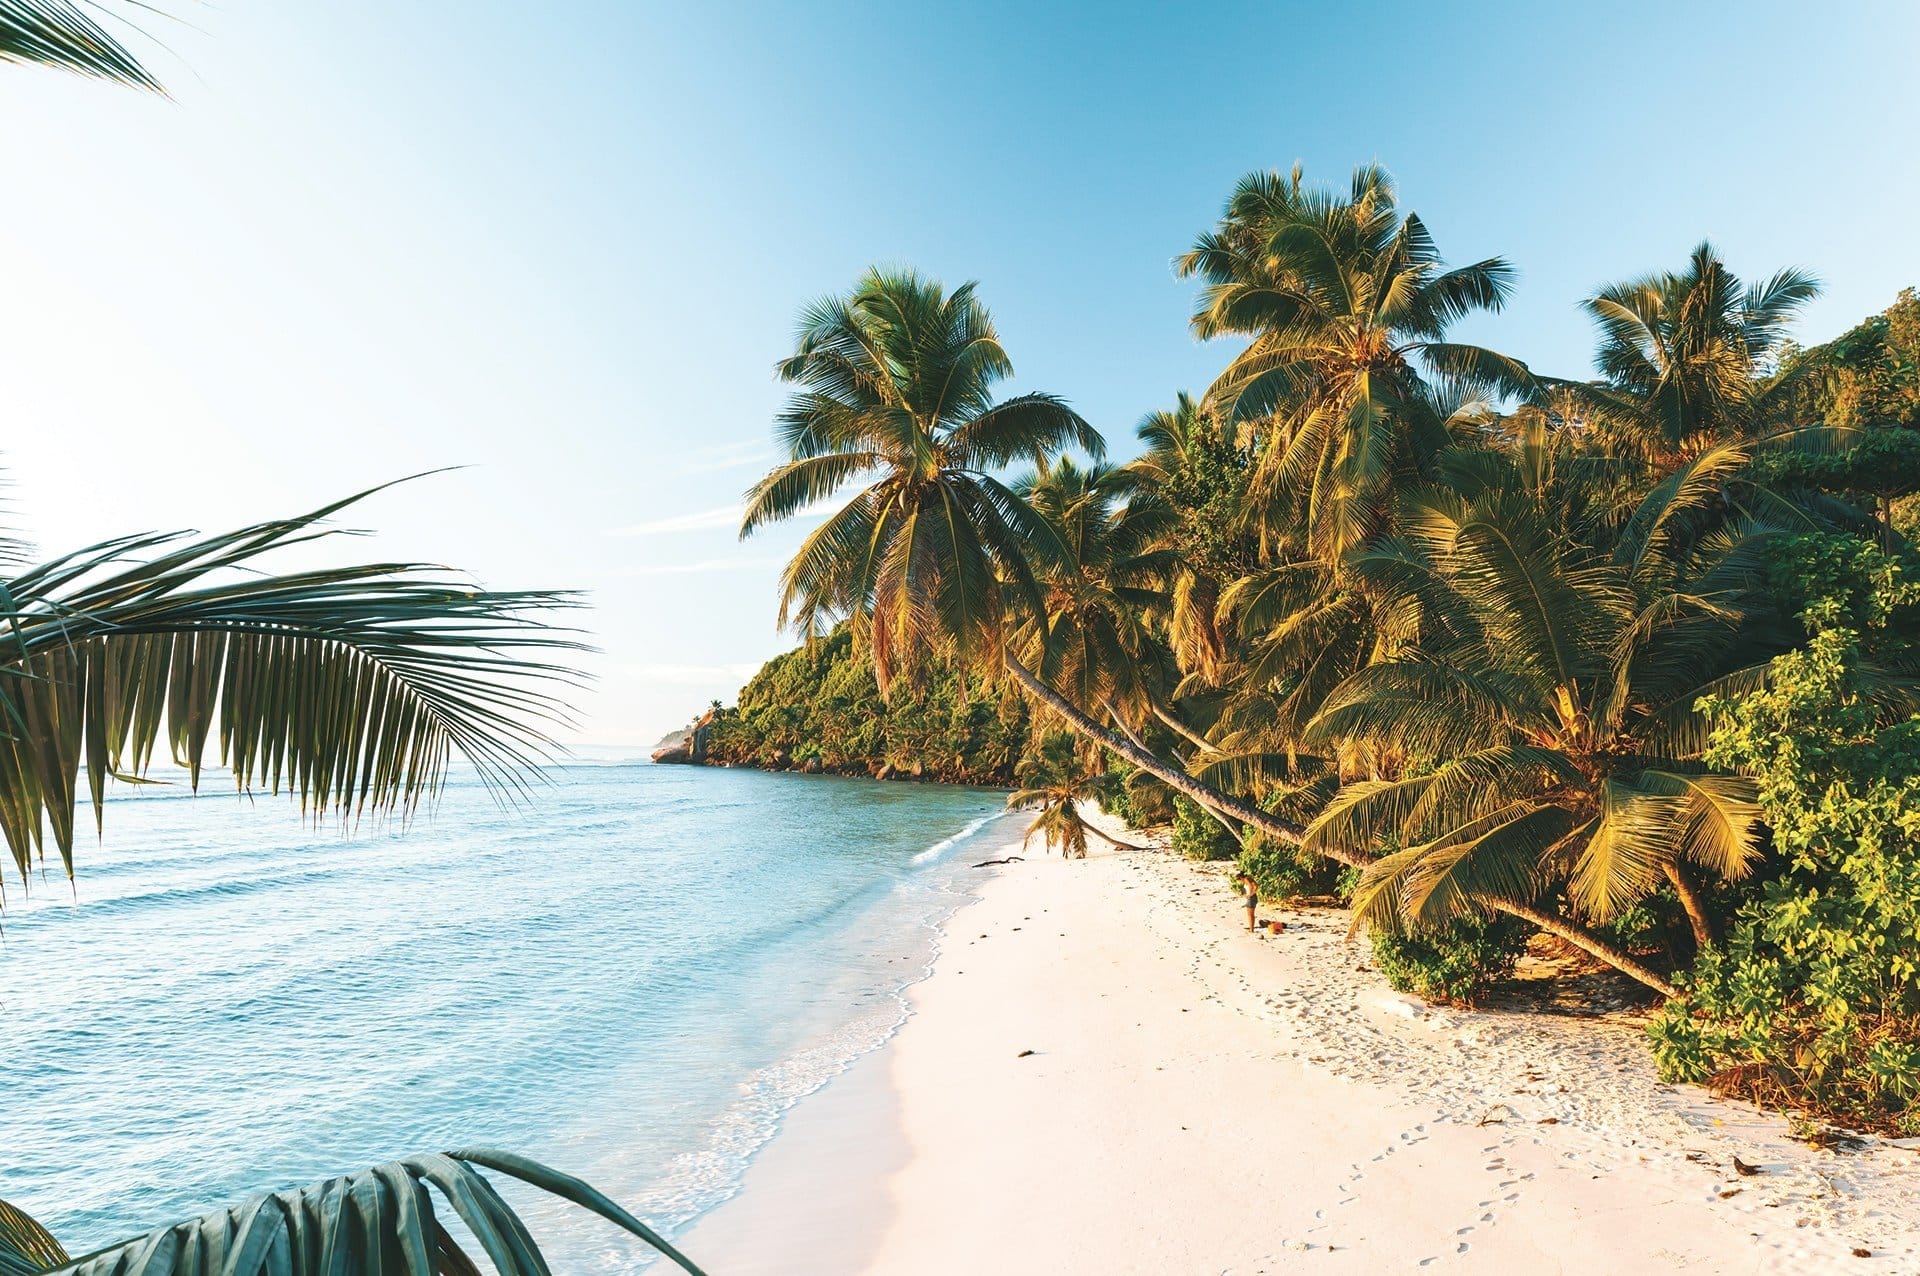 Seychelles, the archipelago of 115 islands in the vanilla islands